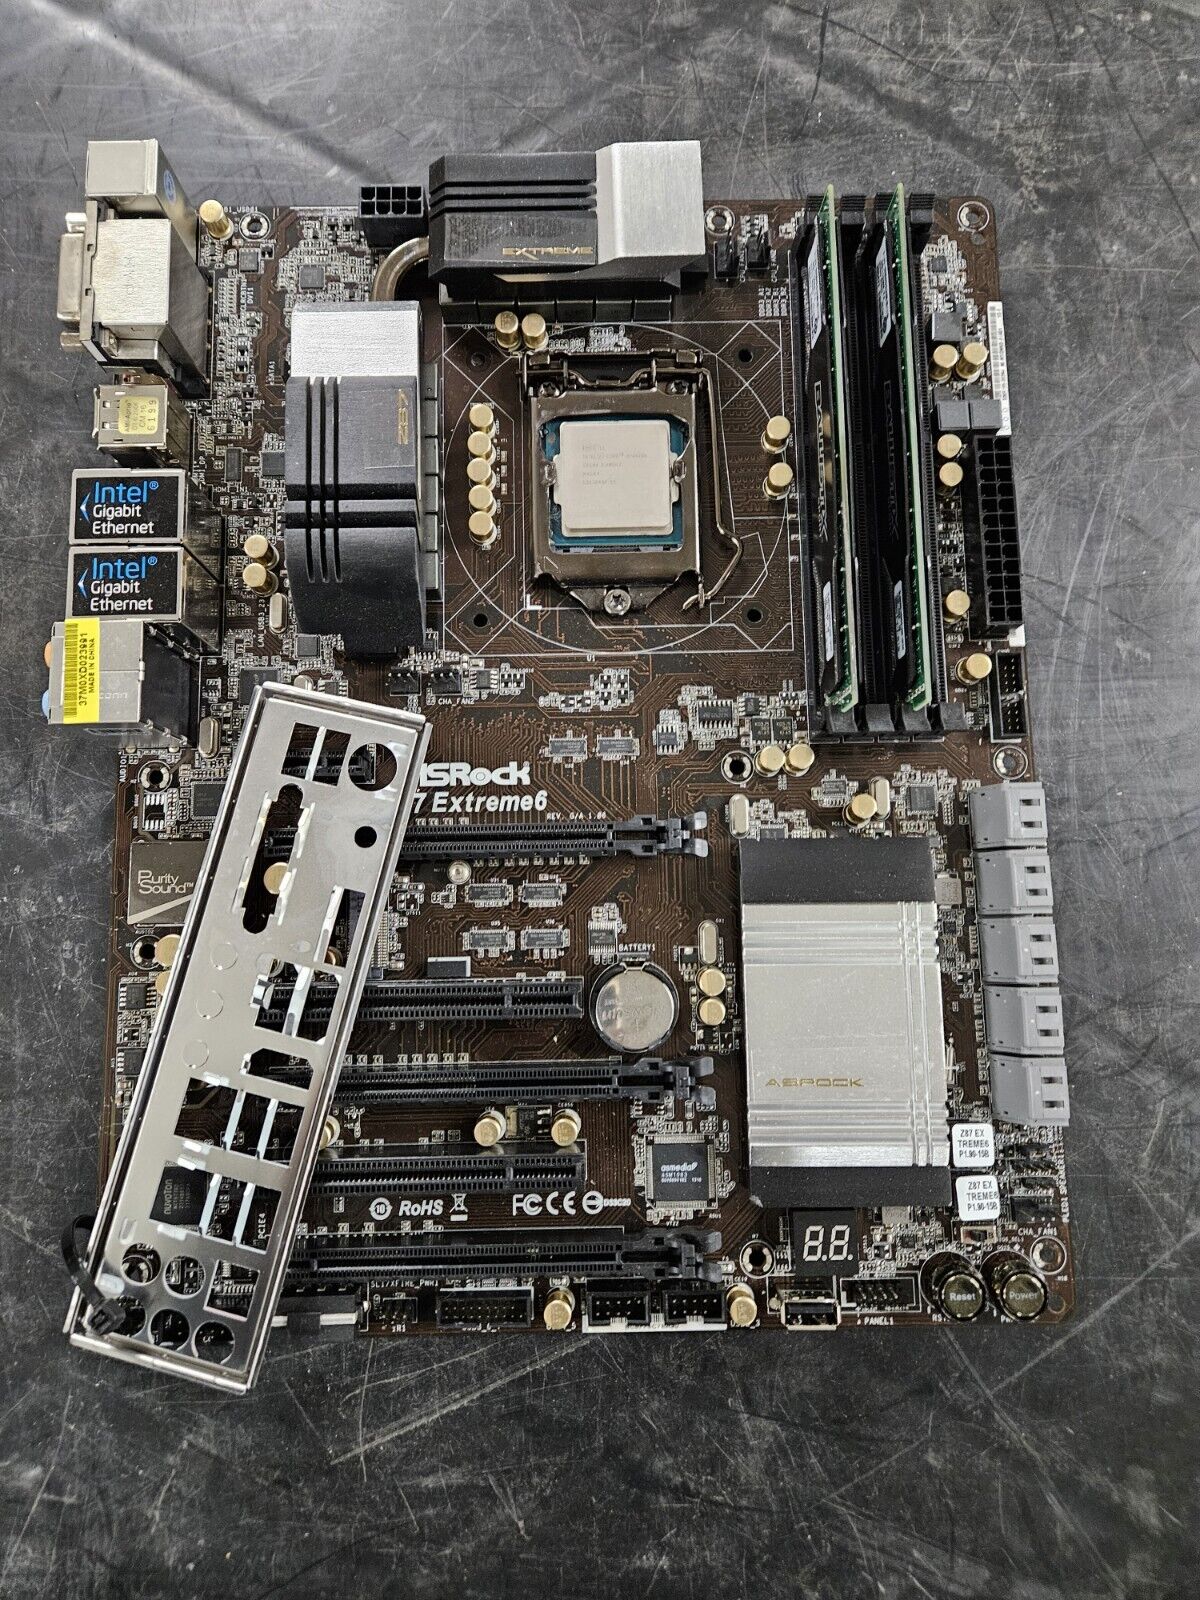 ASRock Z87 Extreme6 ATX Motherboard w/ i5-4670k 16GB DDR3 - Parts/Repair